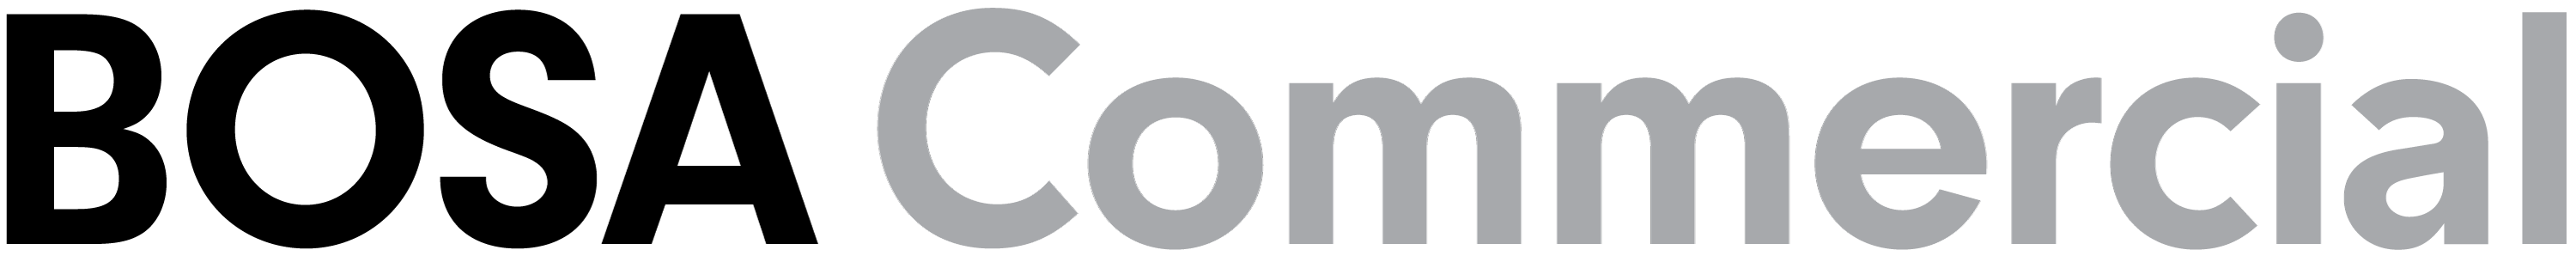 Bosa Commercial Logo